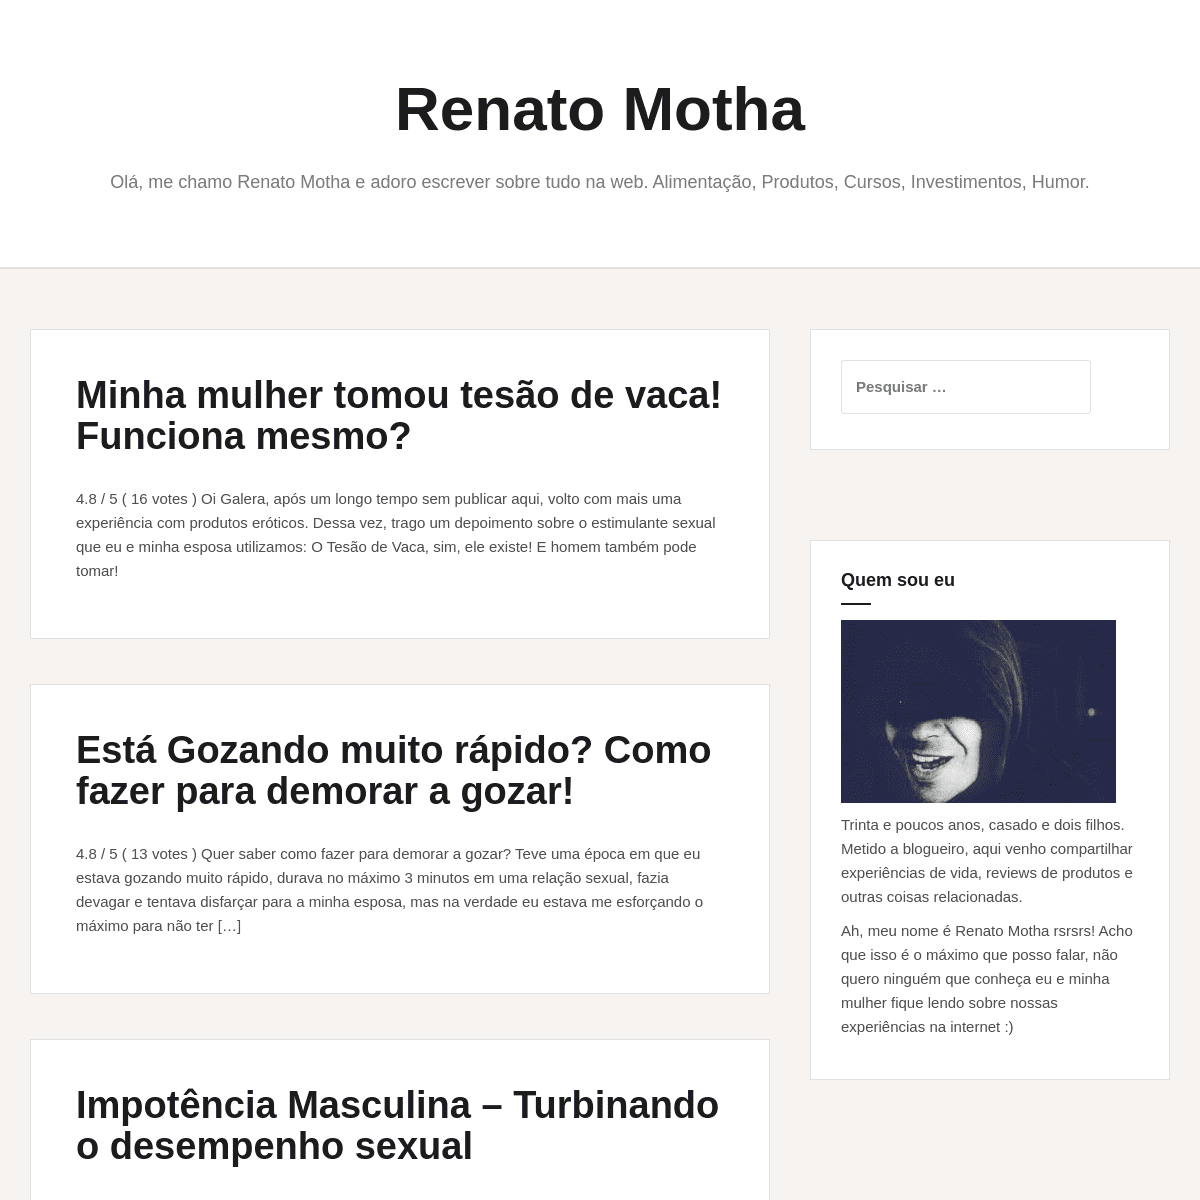 Renato Motha - OlÃ¡, me chamo Renato Motha e adoro escrever sobre tudo na web. AlimentaÃ§Ã£o, Produtos, Cursos, Investimentos, H